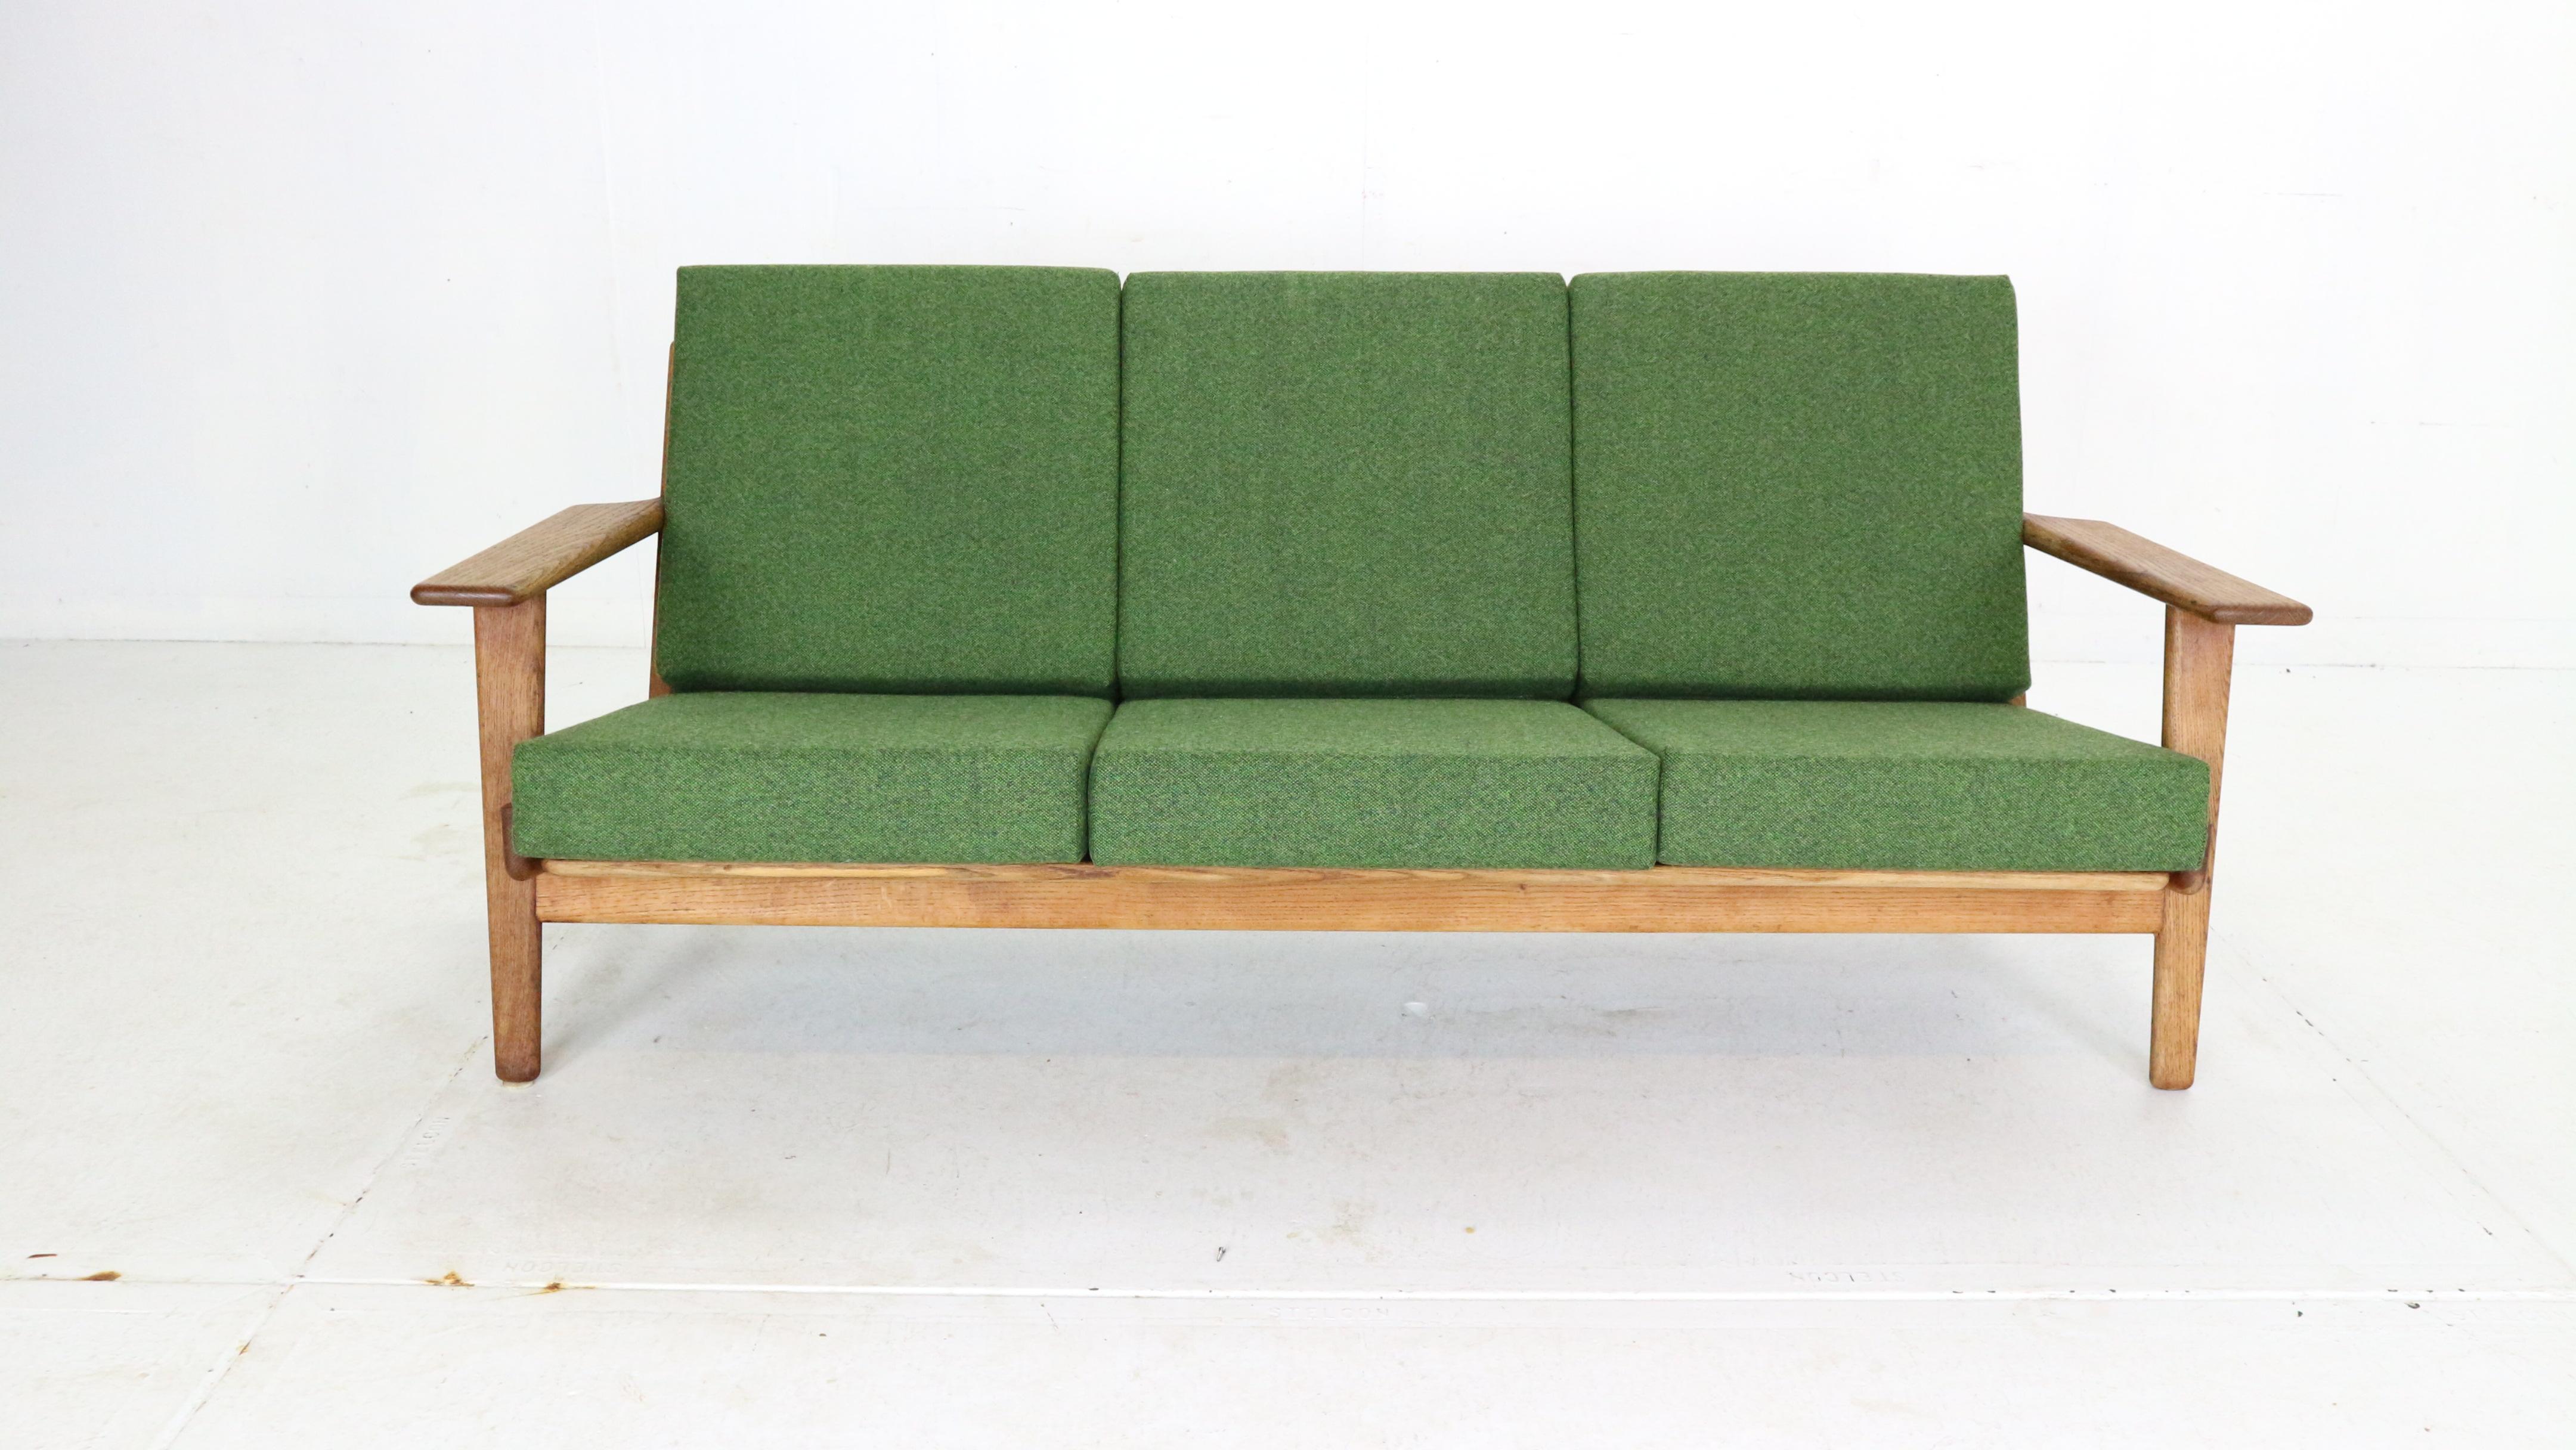 sofa reupholstery